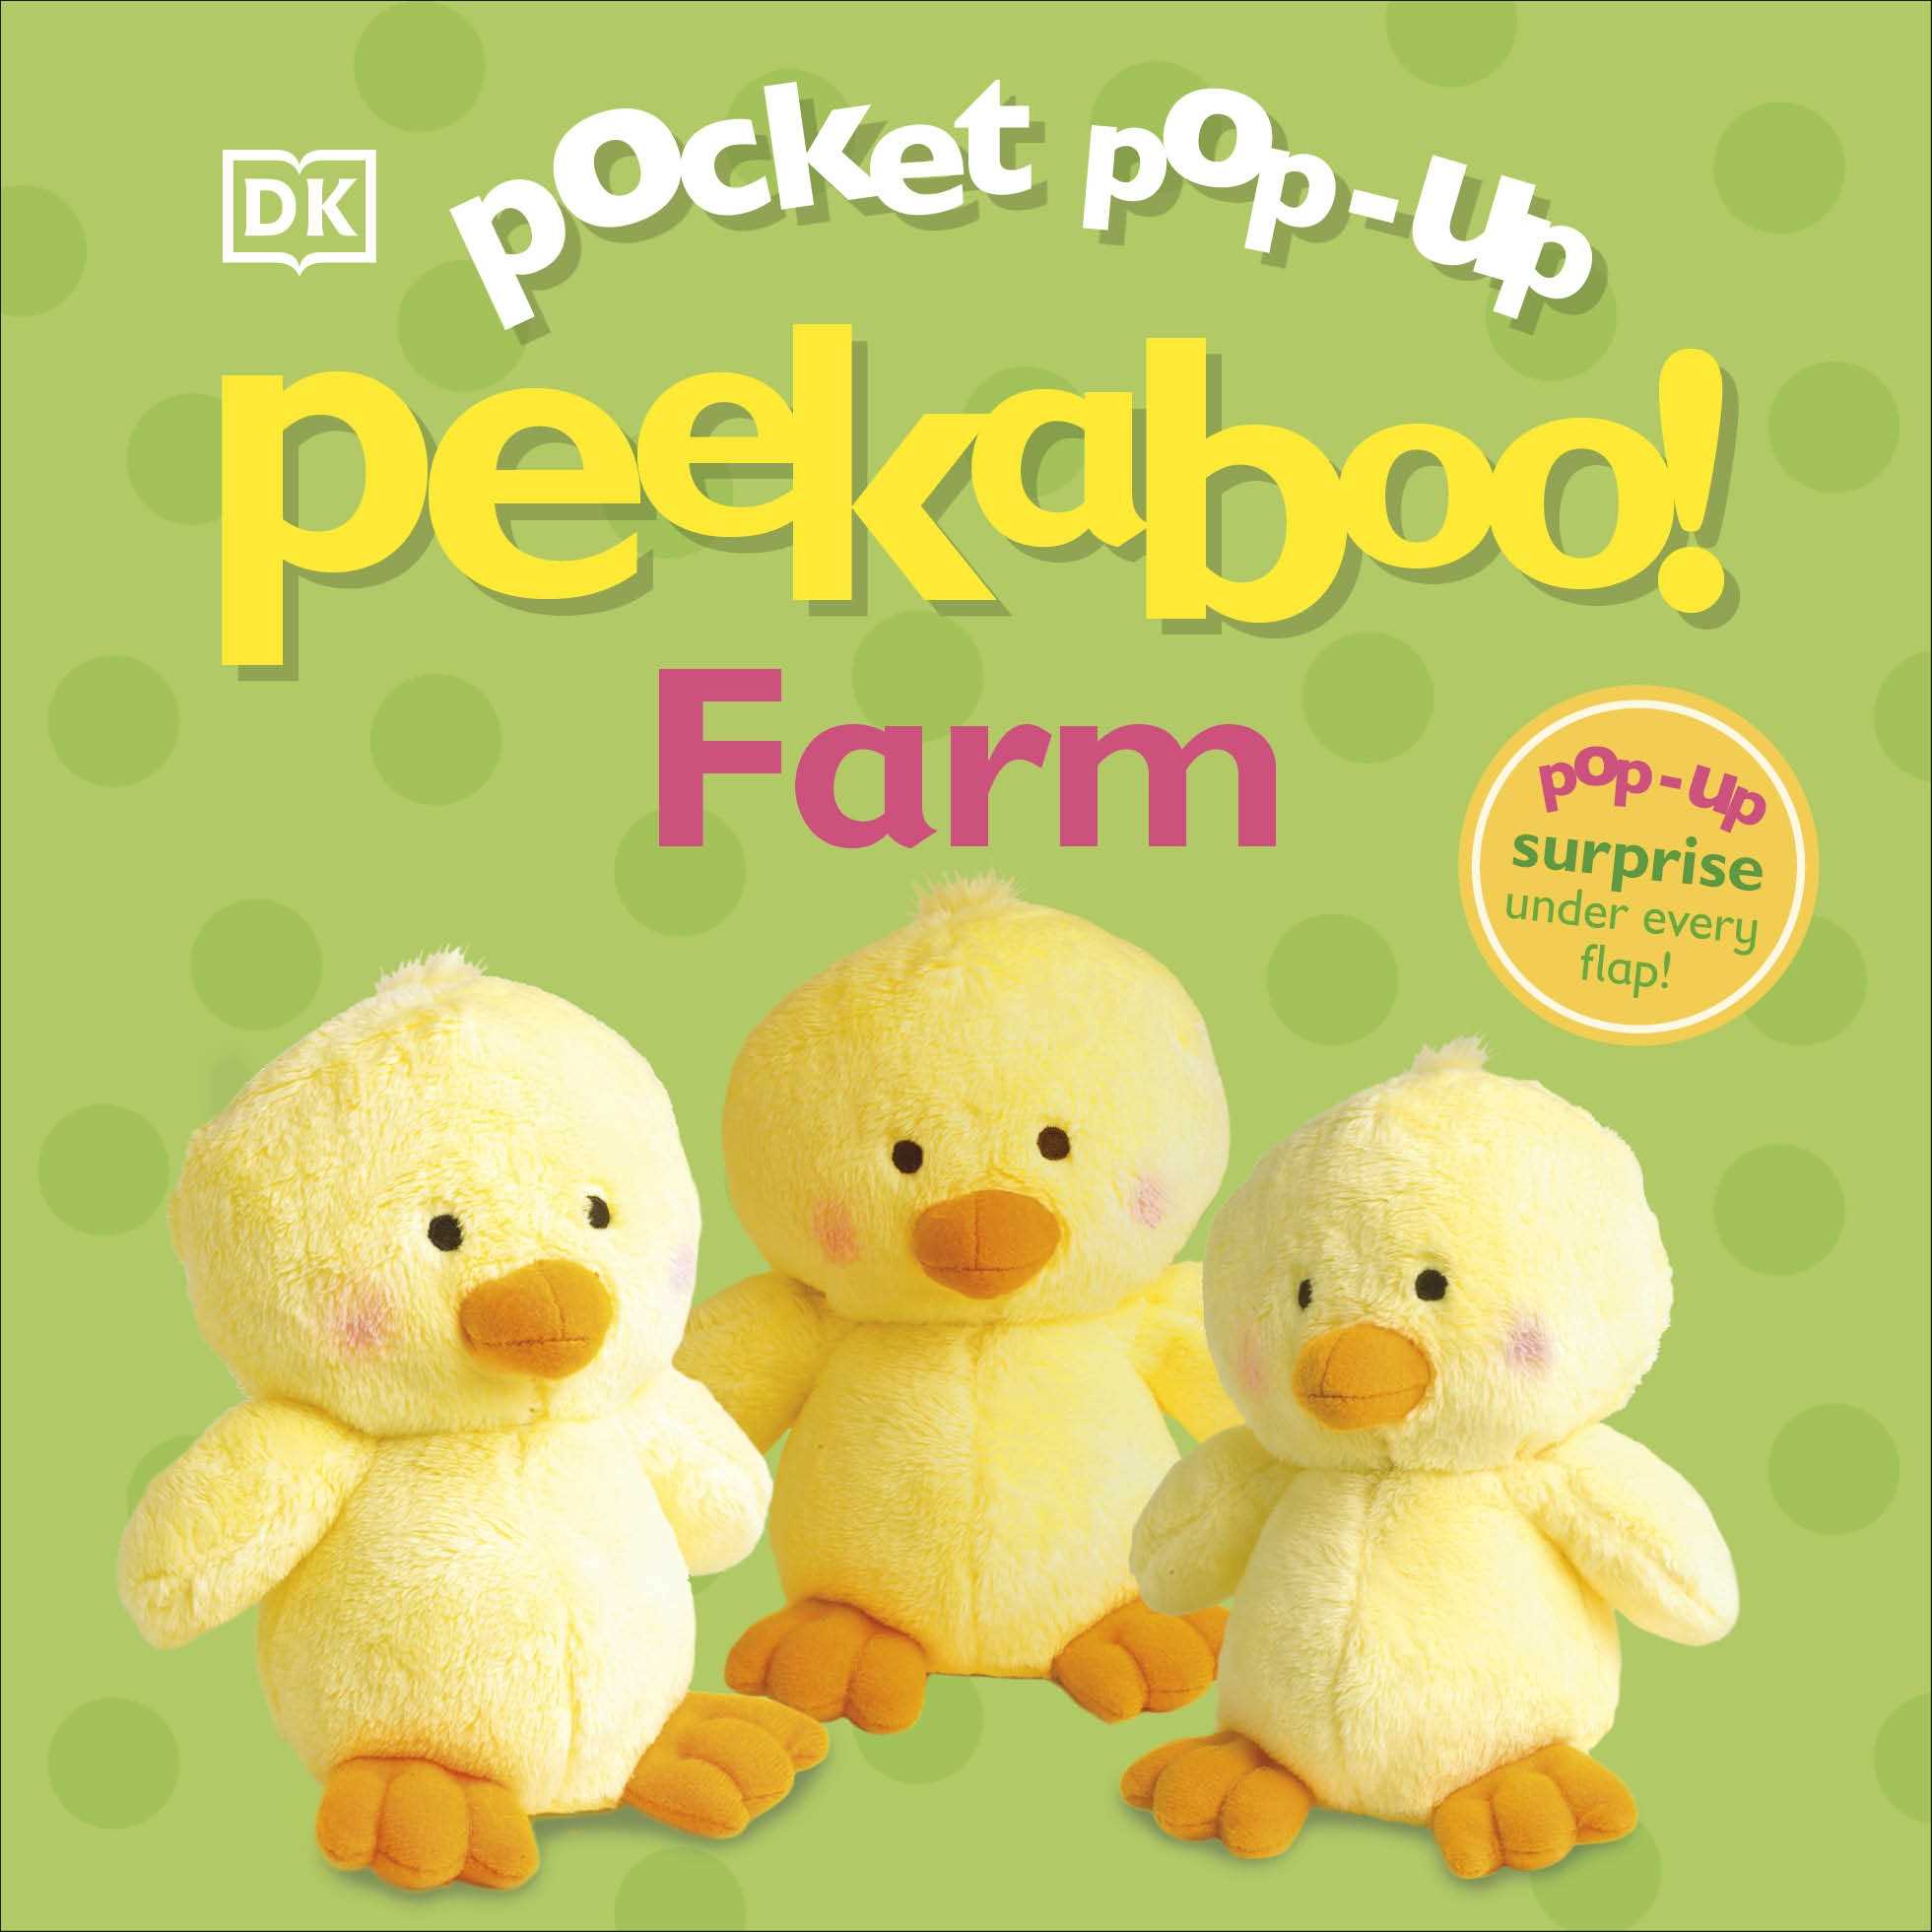 Farm (Pocket Pop-Up Peekaboo!)